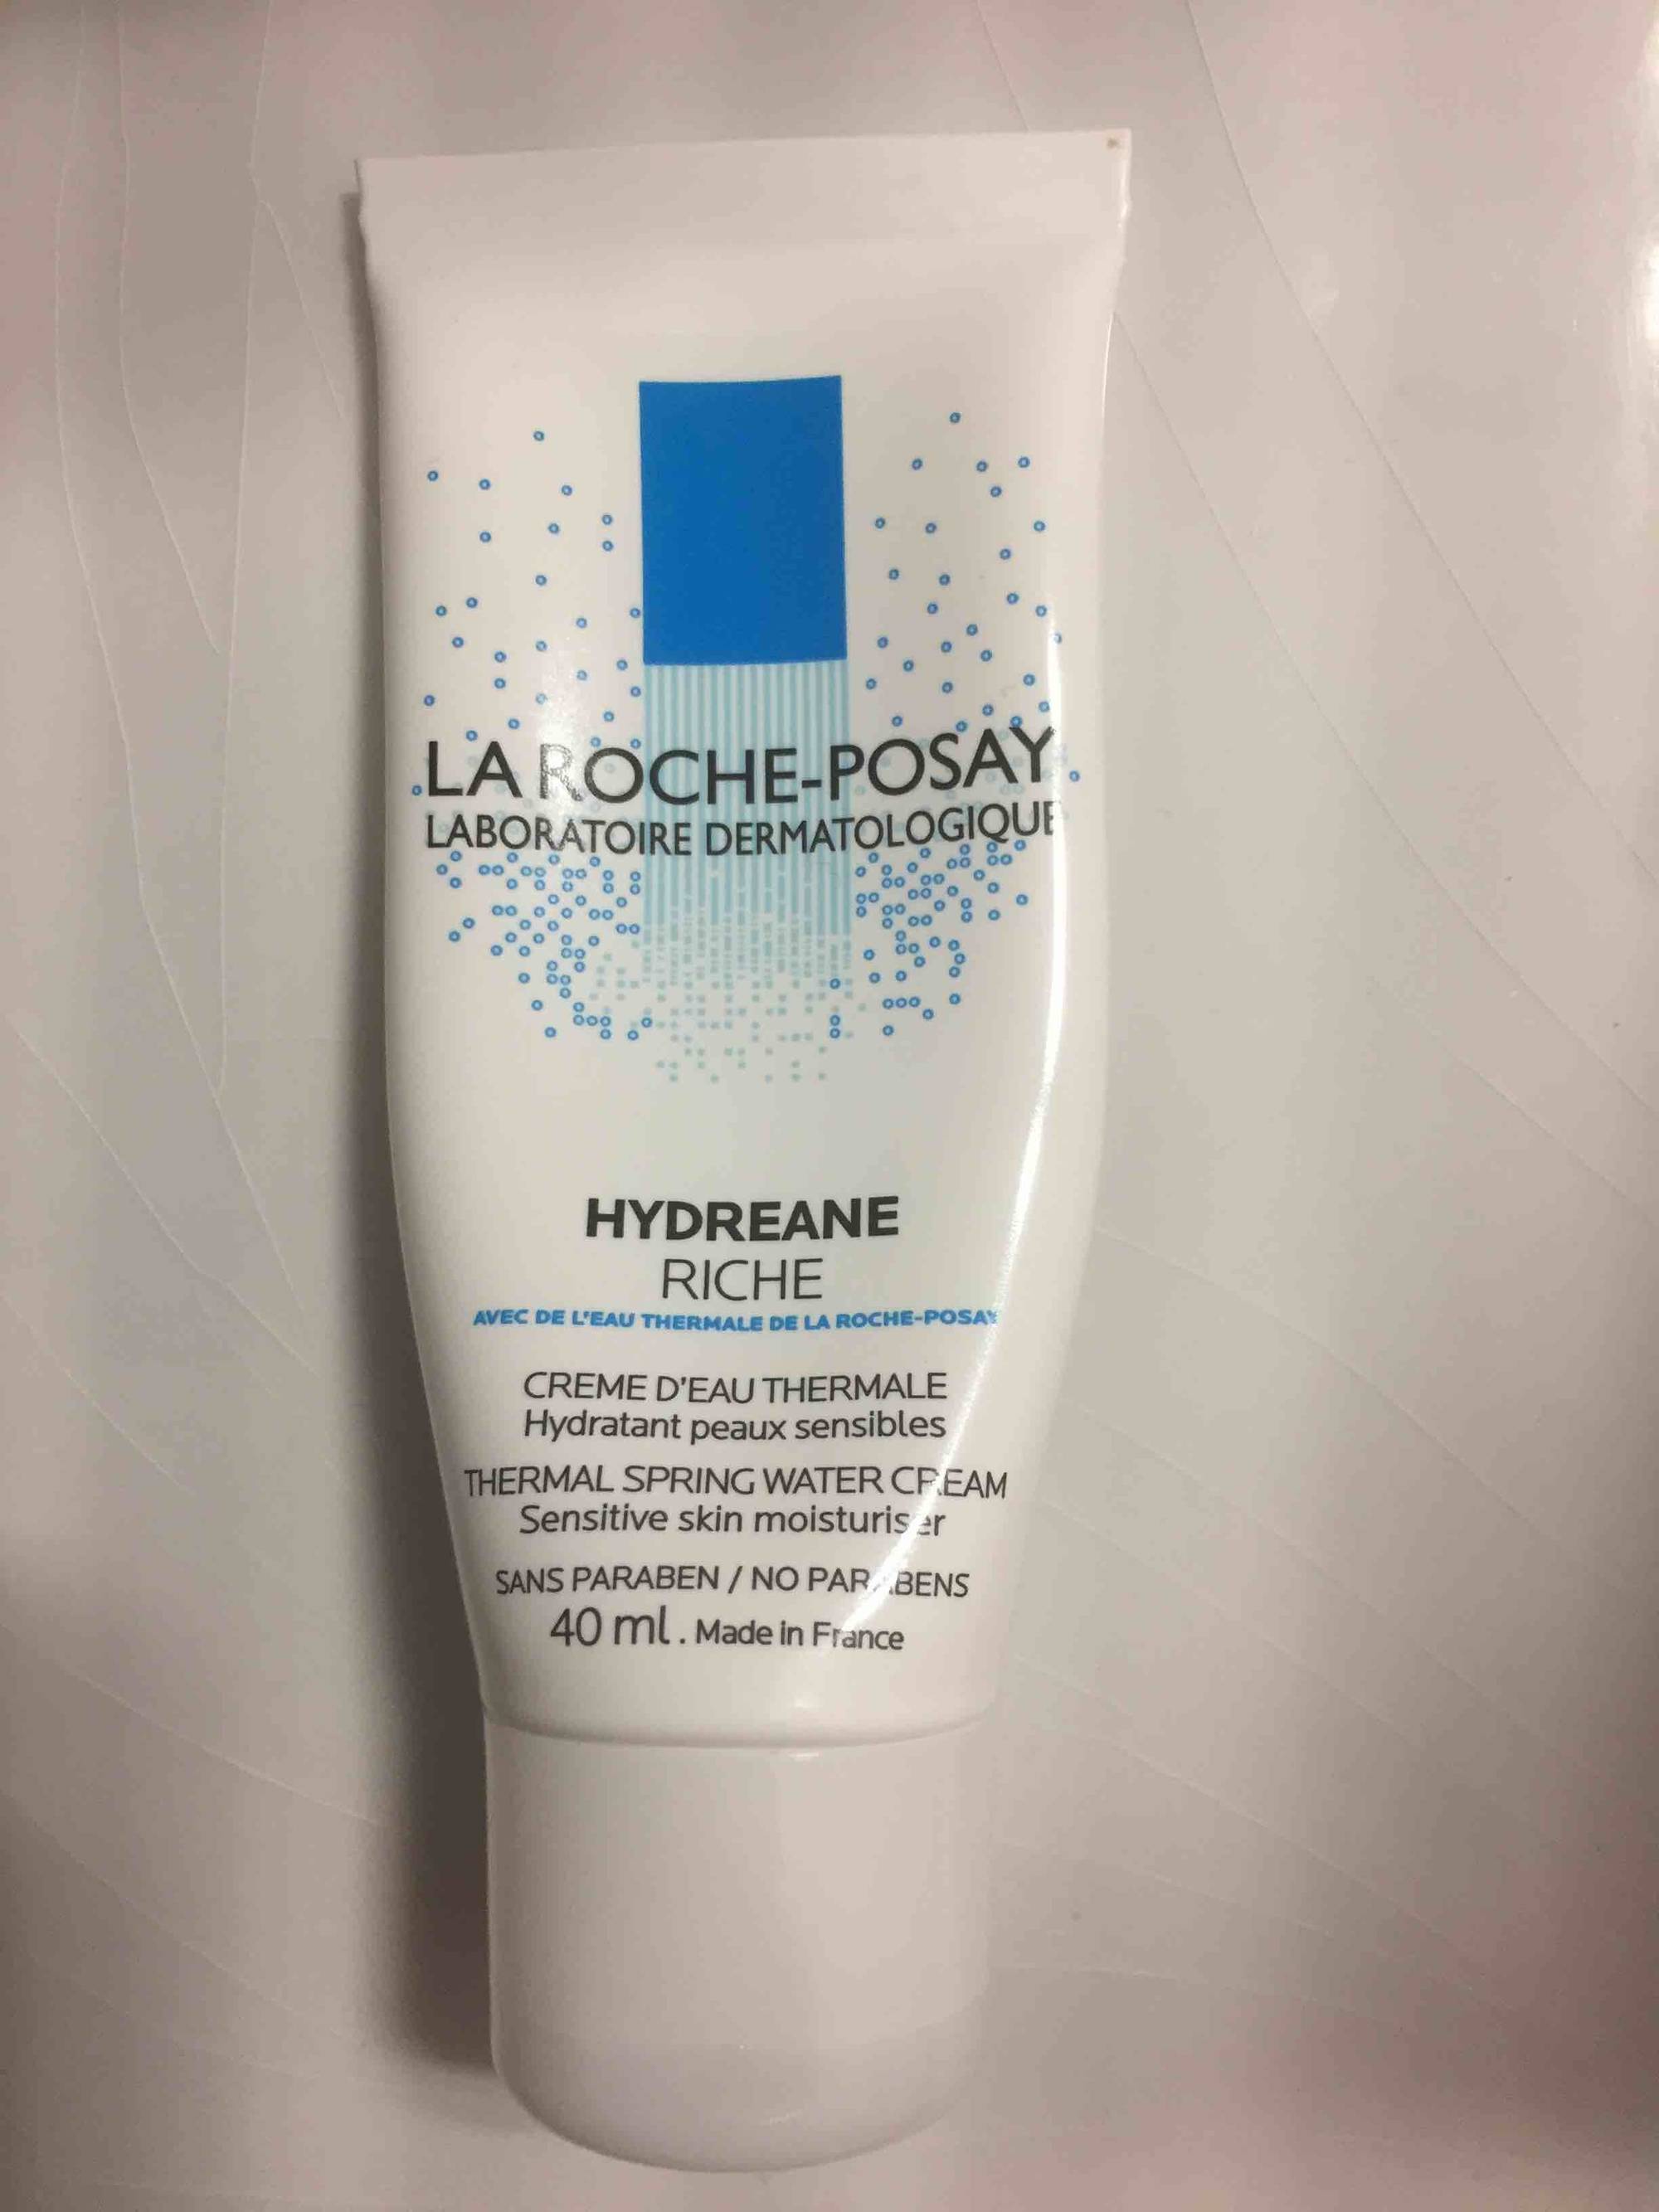 LA ROCHE-POSAY - Hydreane riche - Hydratant peaux sensibles